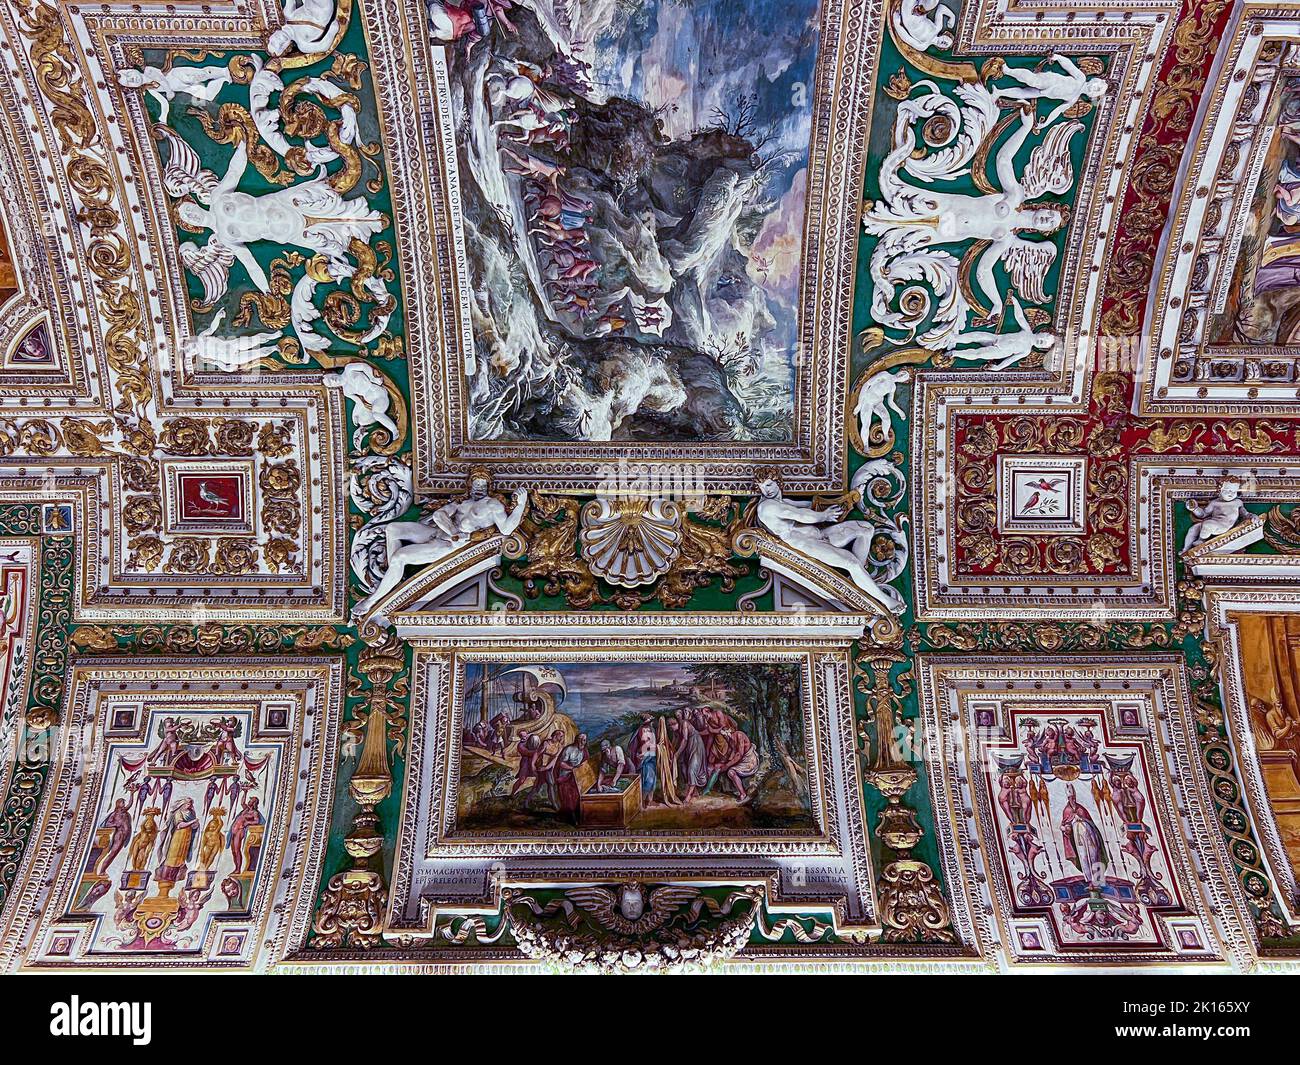 Hall of maps - Gallery of Maps Vatican museum ceiling fresco detail - Italian Renaissance art Vatican City Cesare Nebbia Girolamo Muziano Frescoes Stock Photo